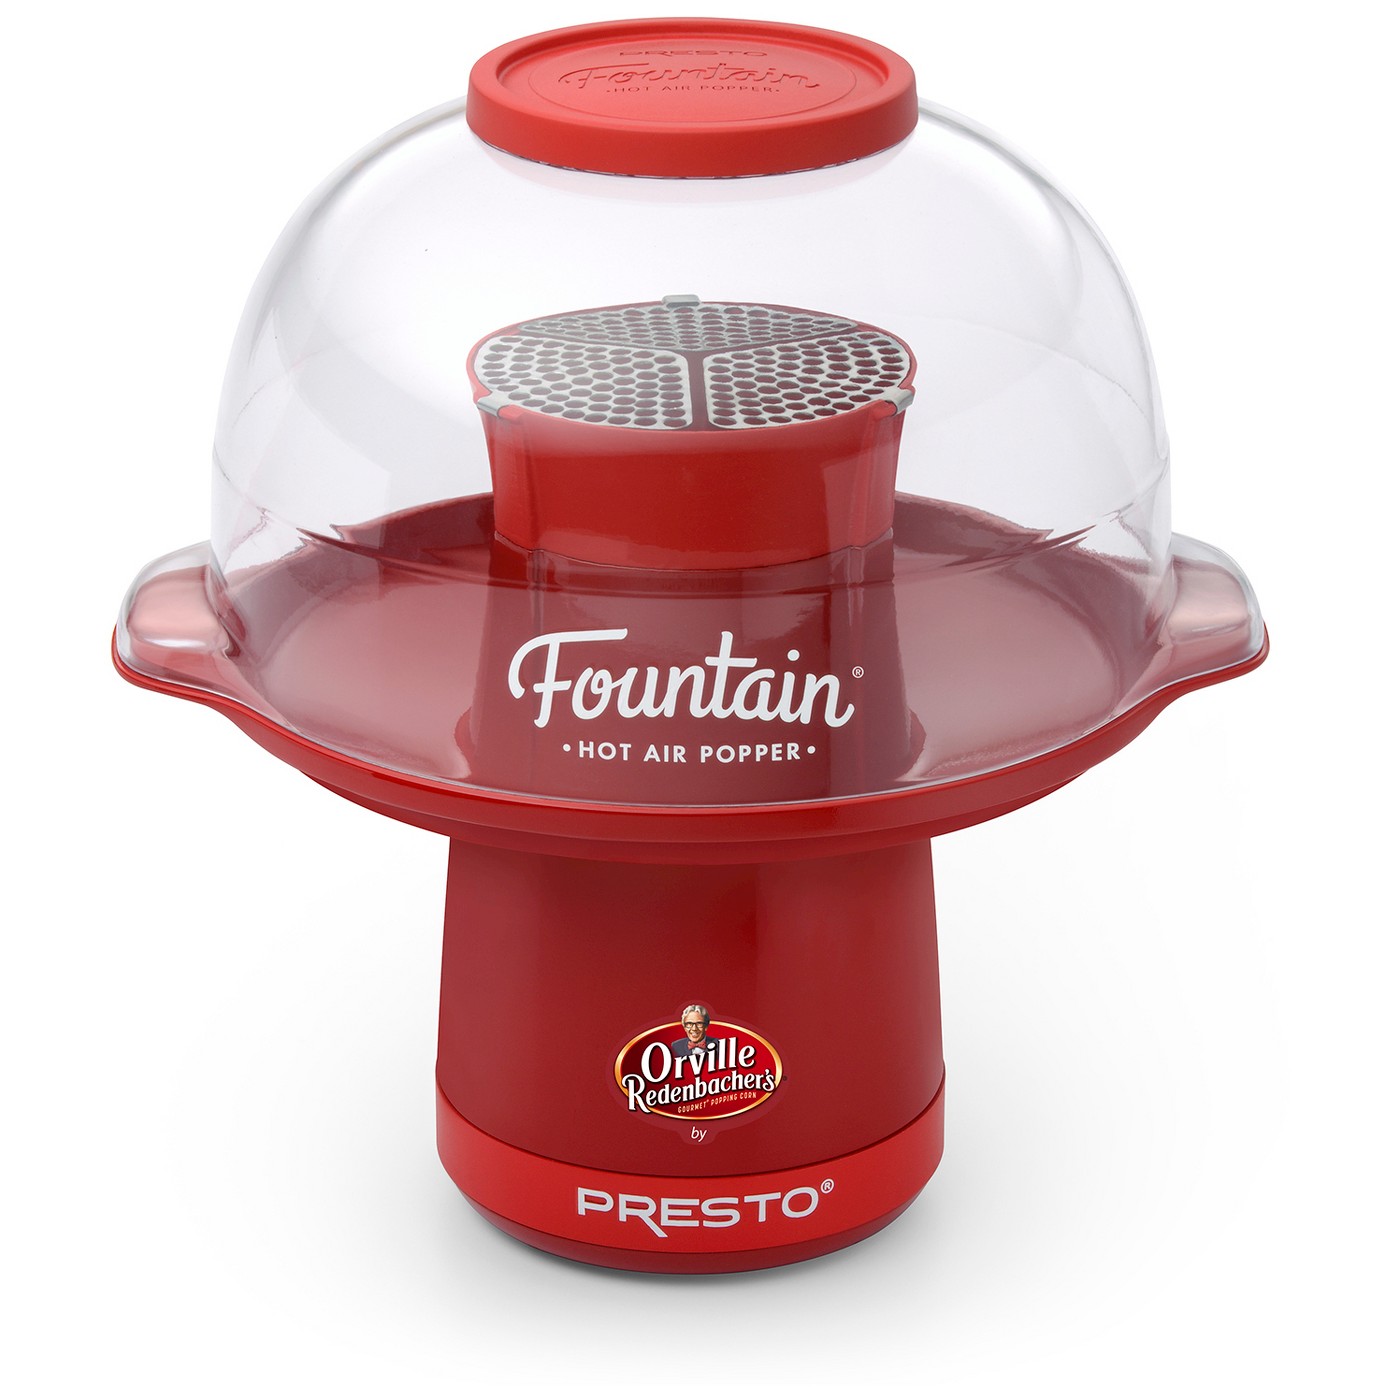 PrestoÂ® Orville Redenbacher's Fountain Hot Air Popper, Red- 04868 - image 1 of 2